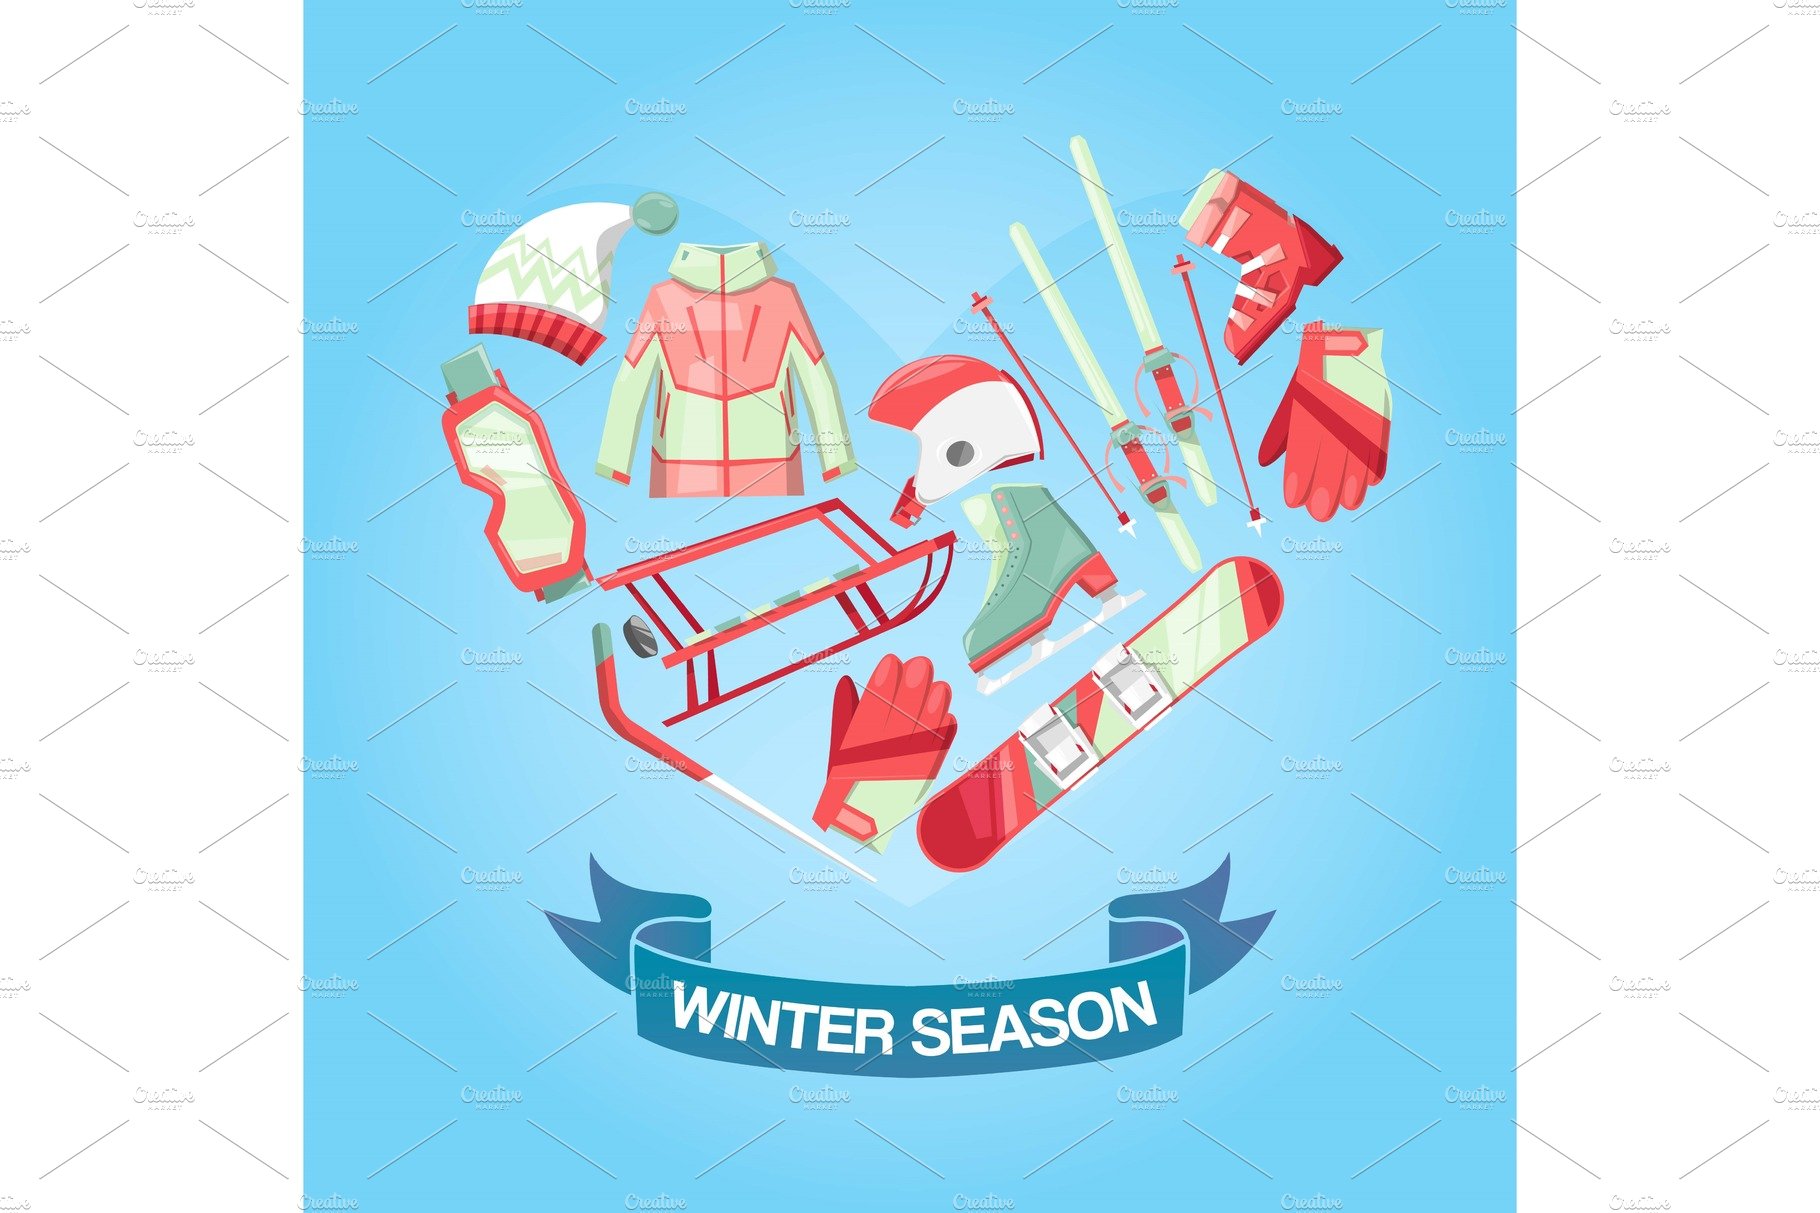 Winter season banner vector cover image.